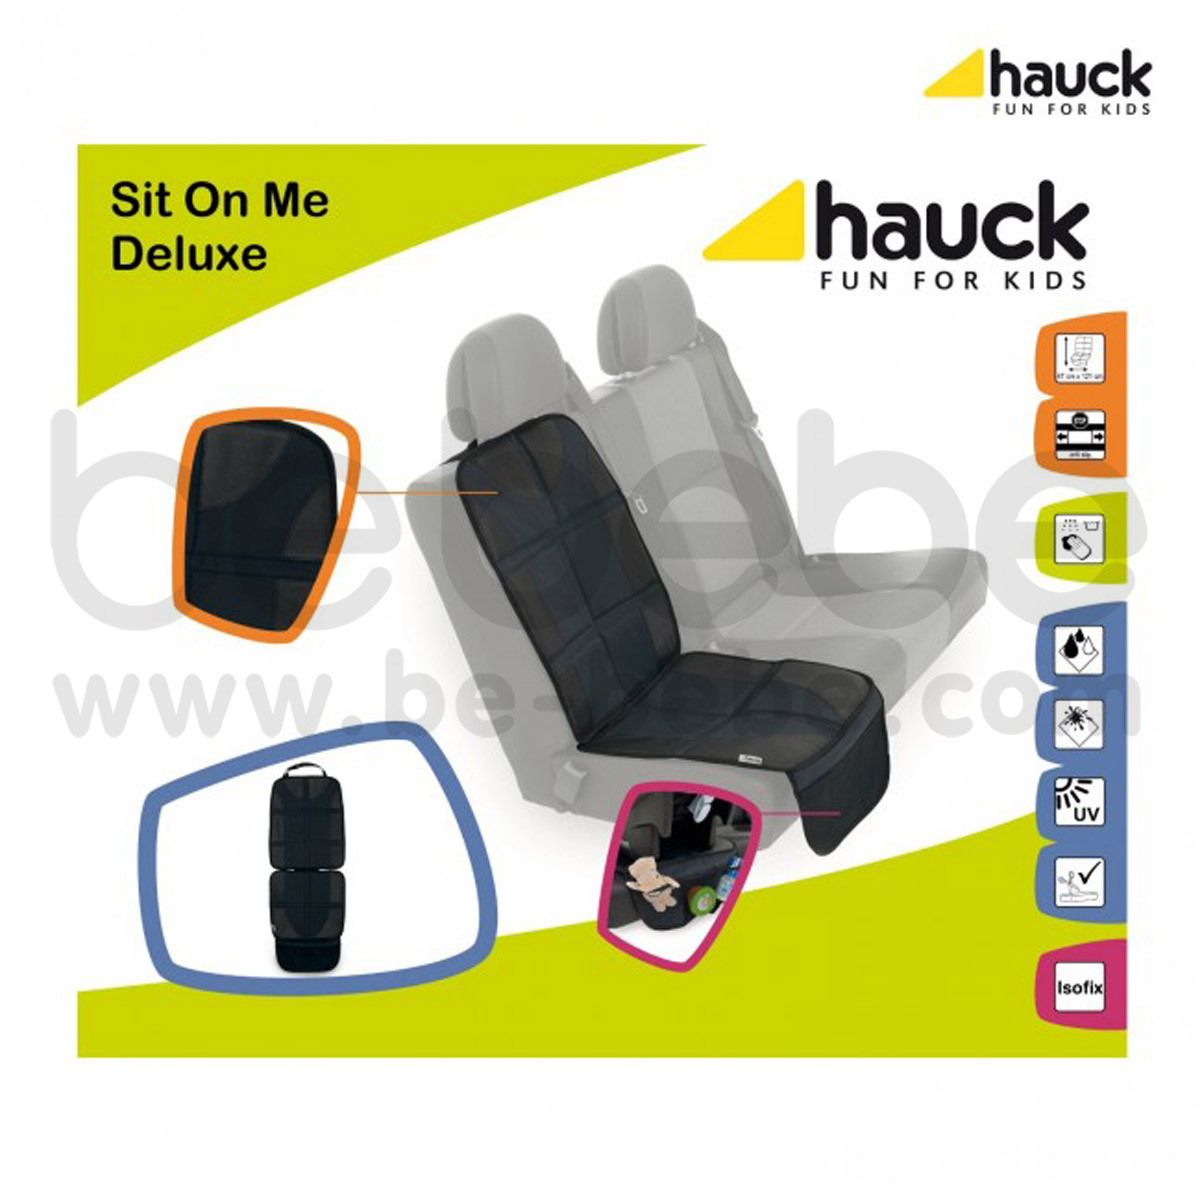 Hauck : Sit On Me Deluxe RT 1850